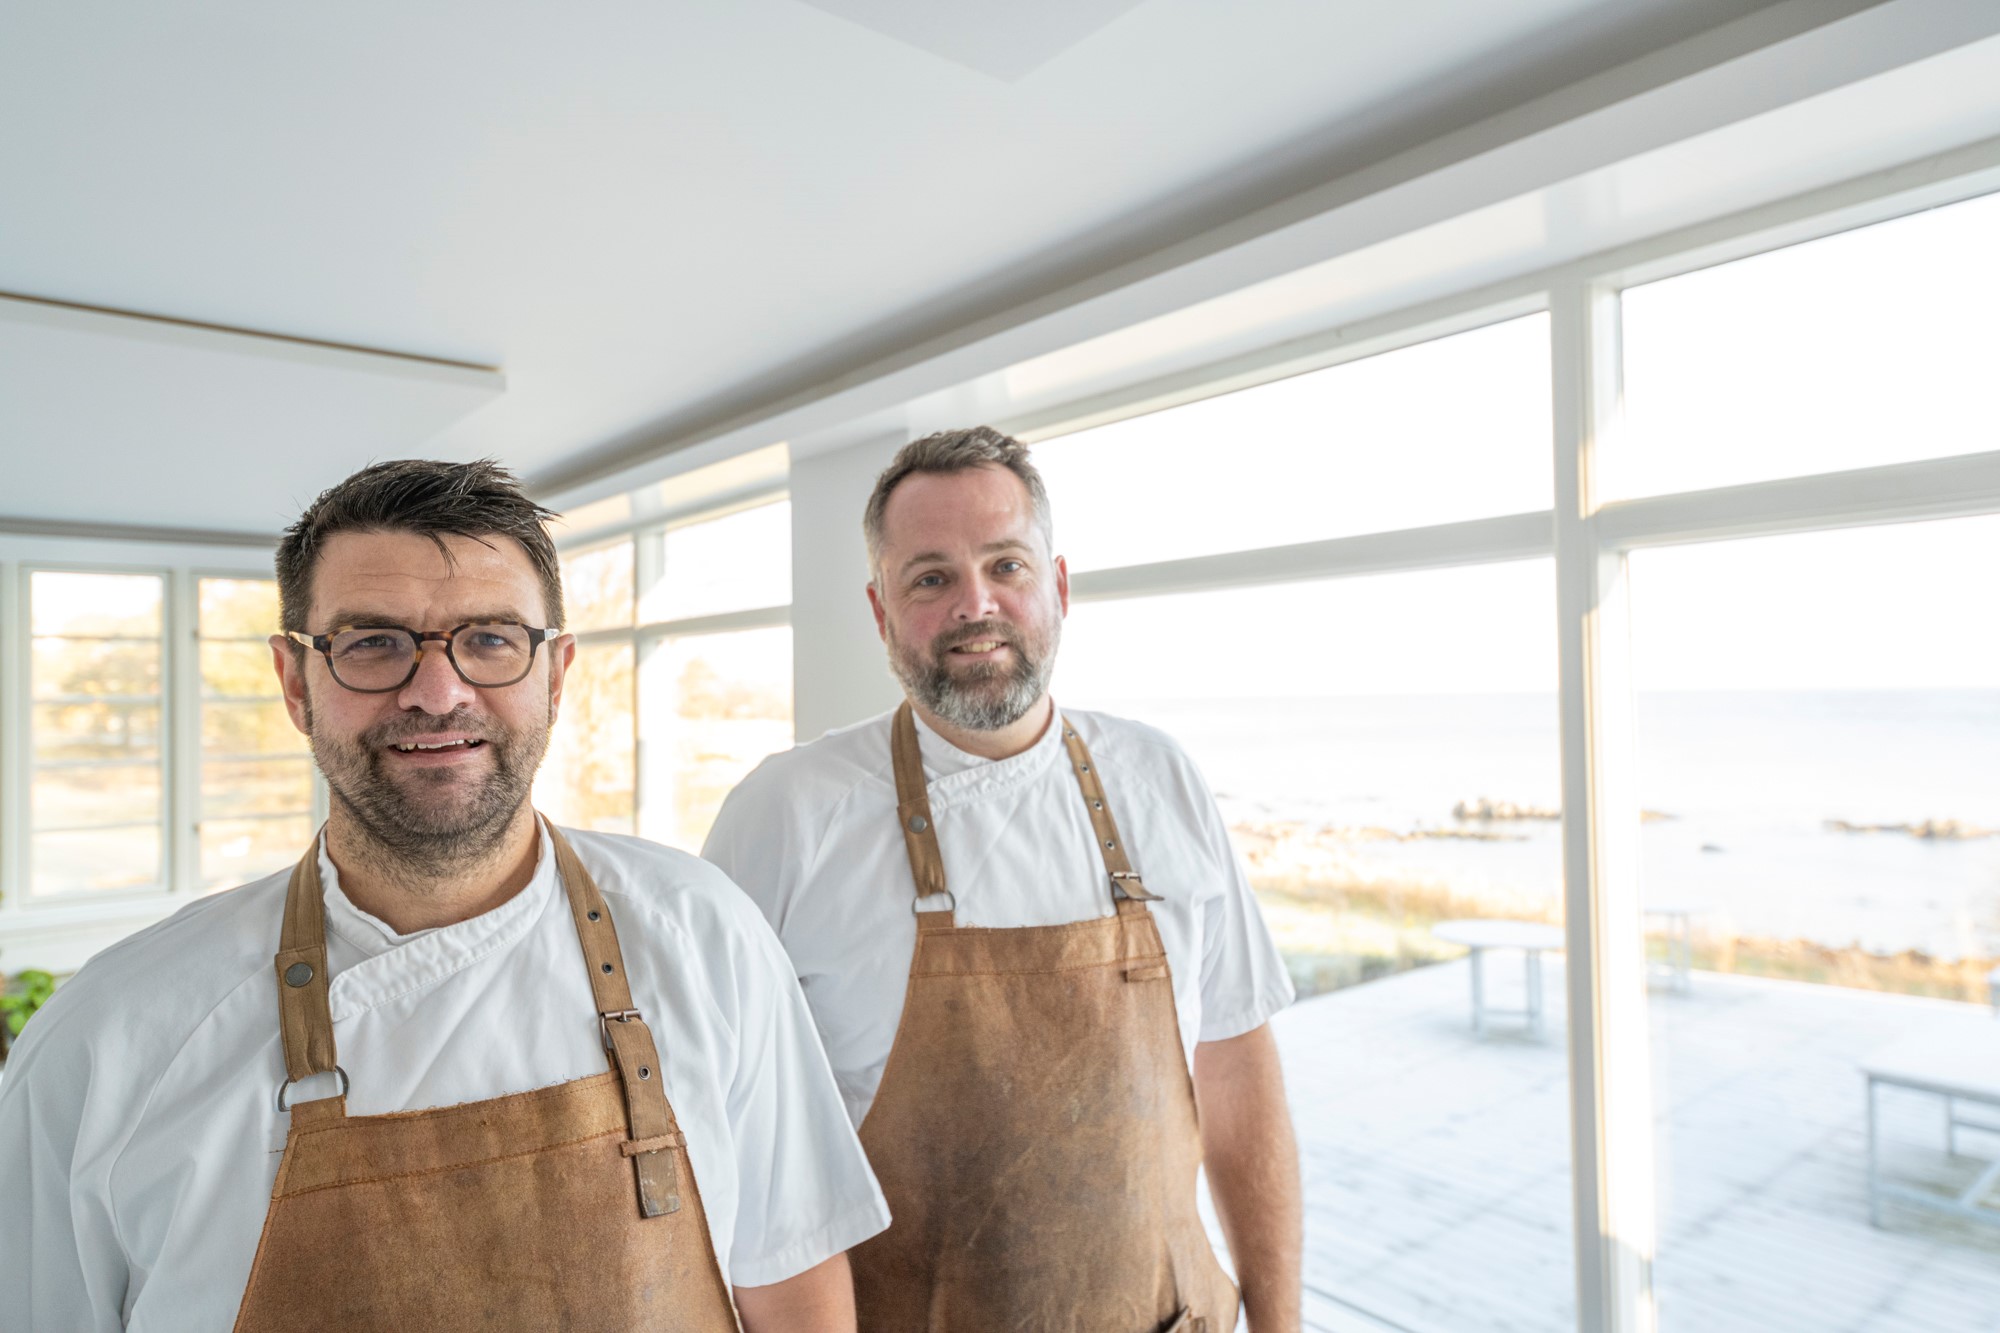 Restaurant Melsted Badehotels restauratører Troels Madsen og Daniel Kruse